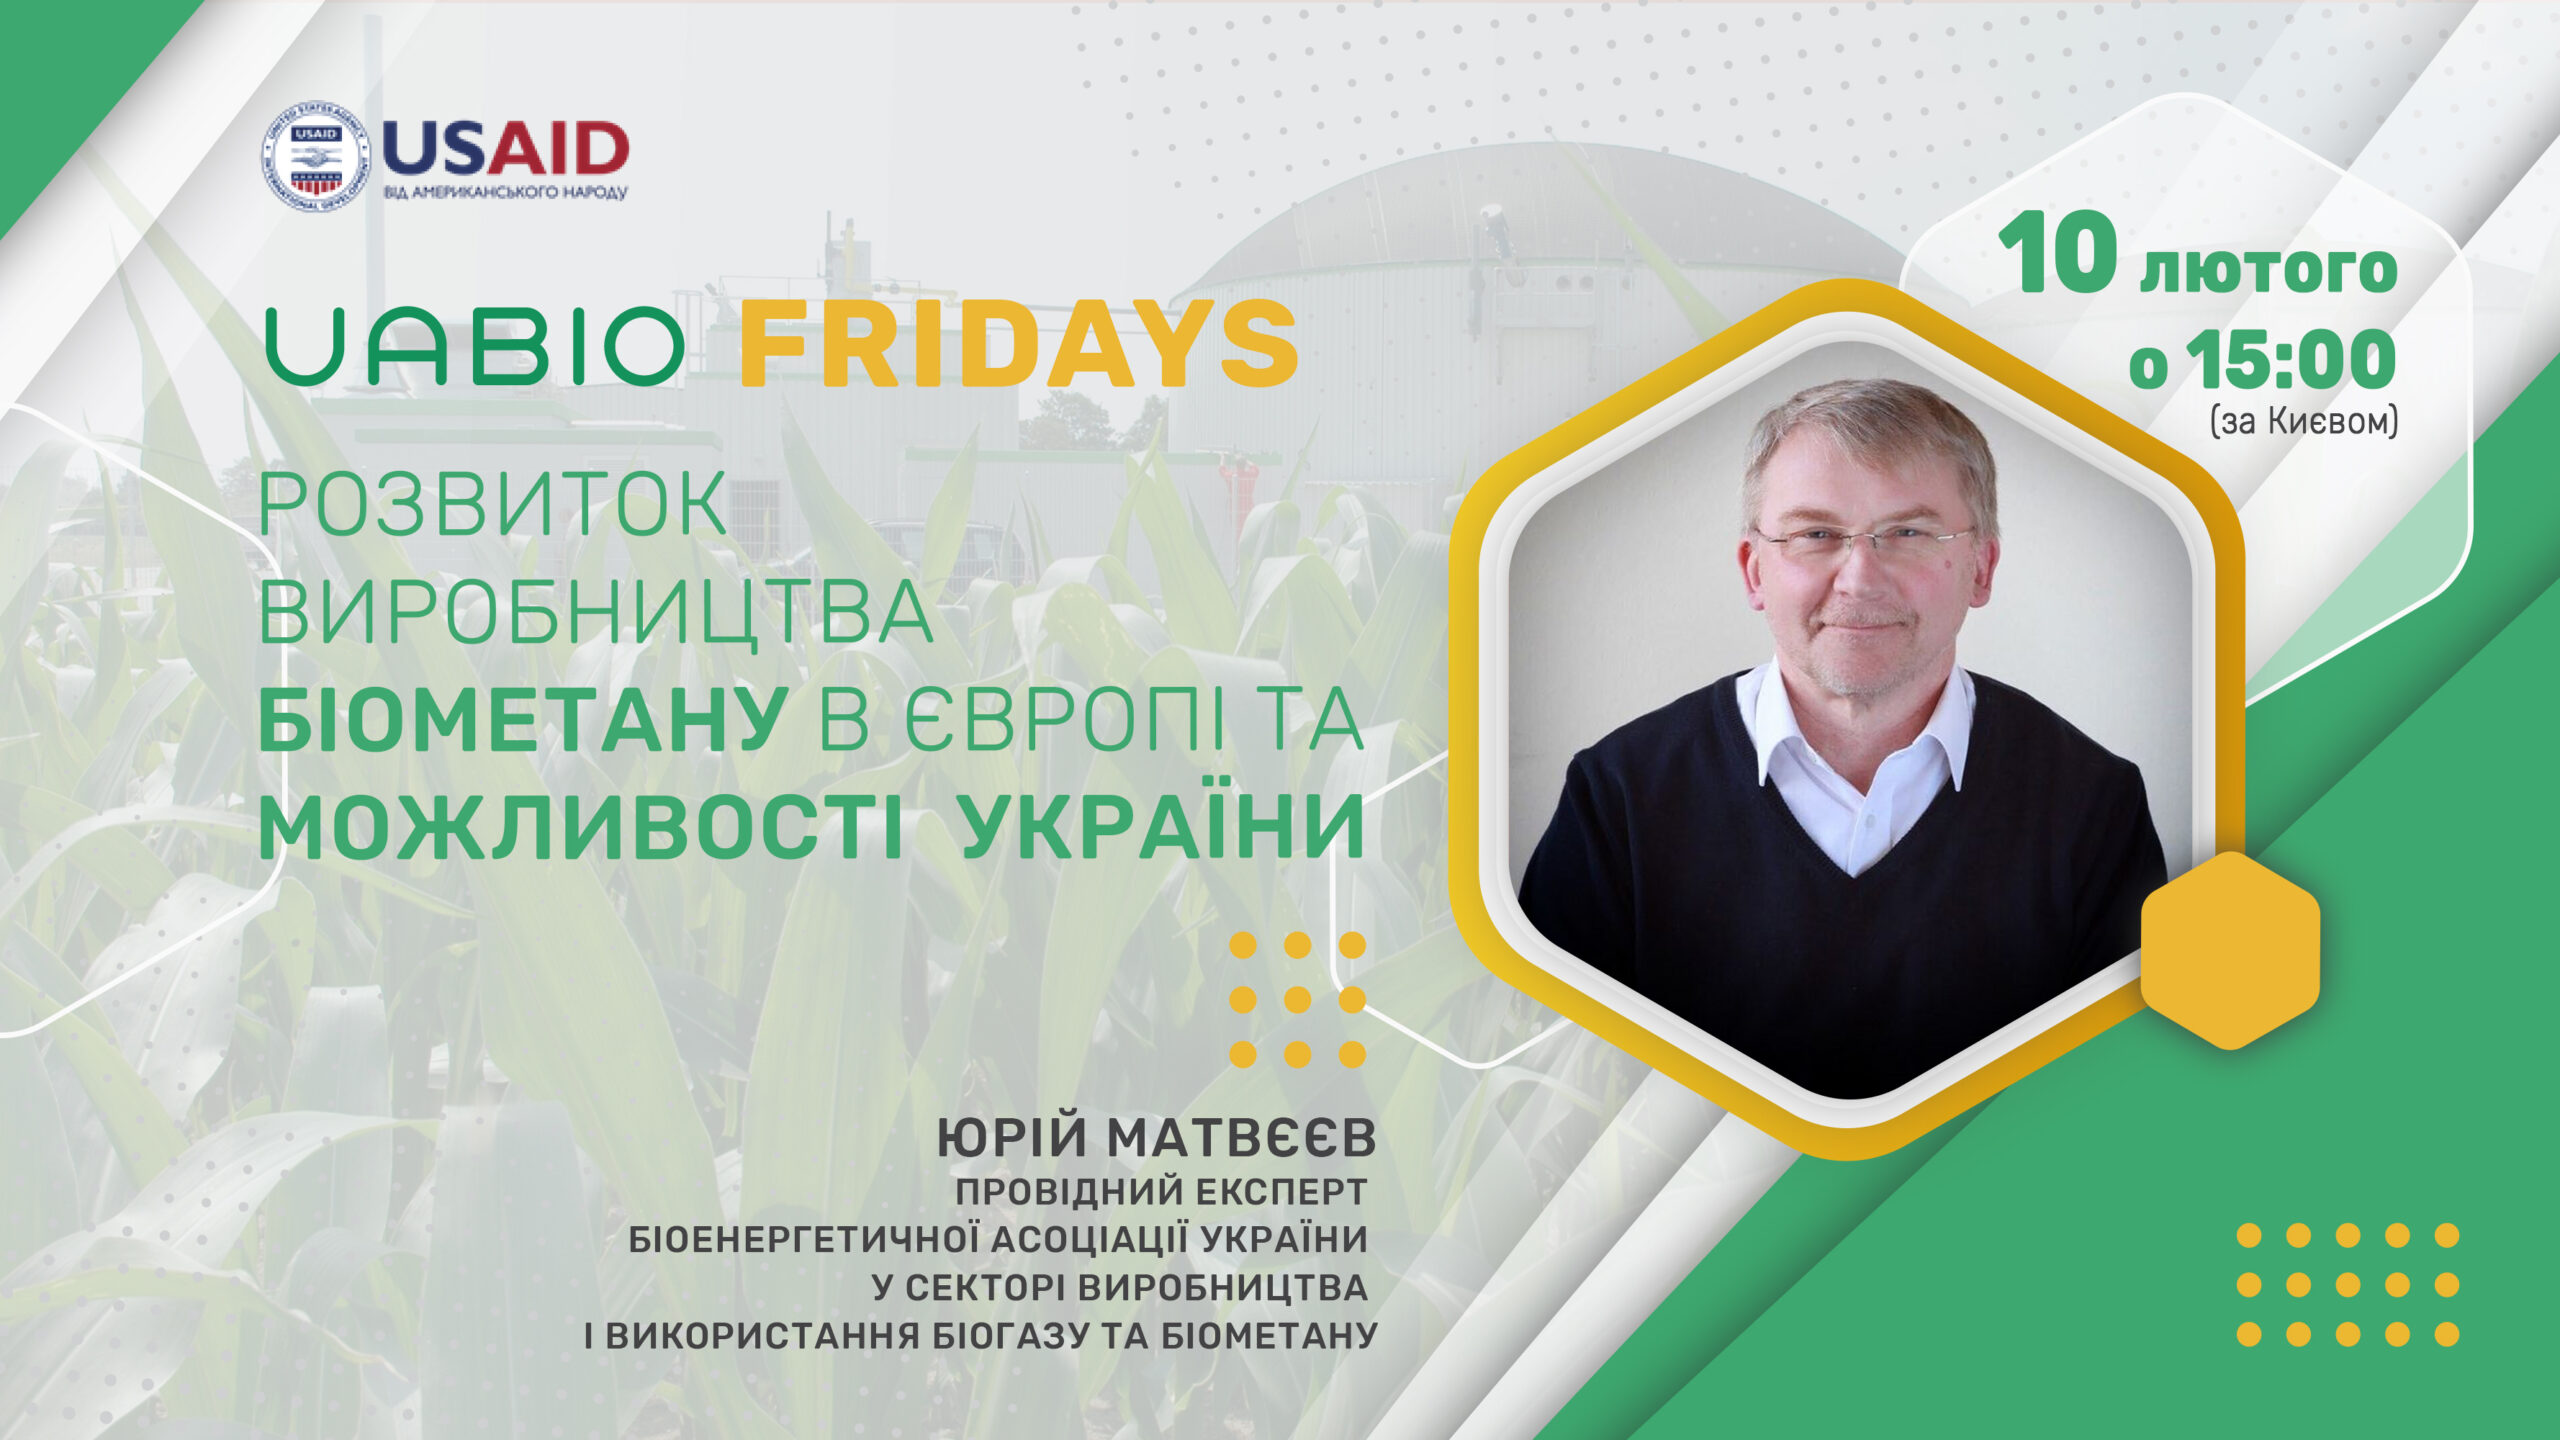 UABIO Fridays Юрій Матвєєв